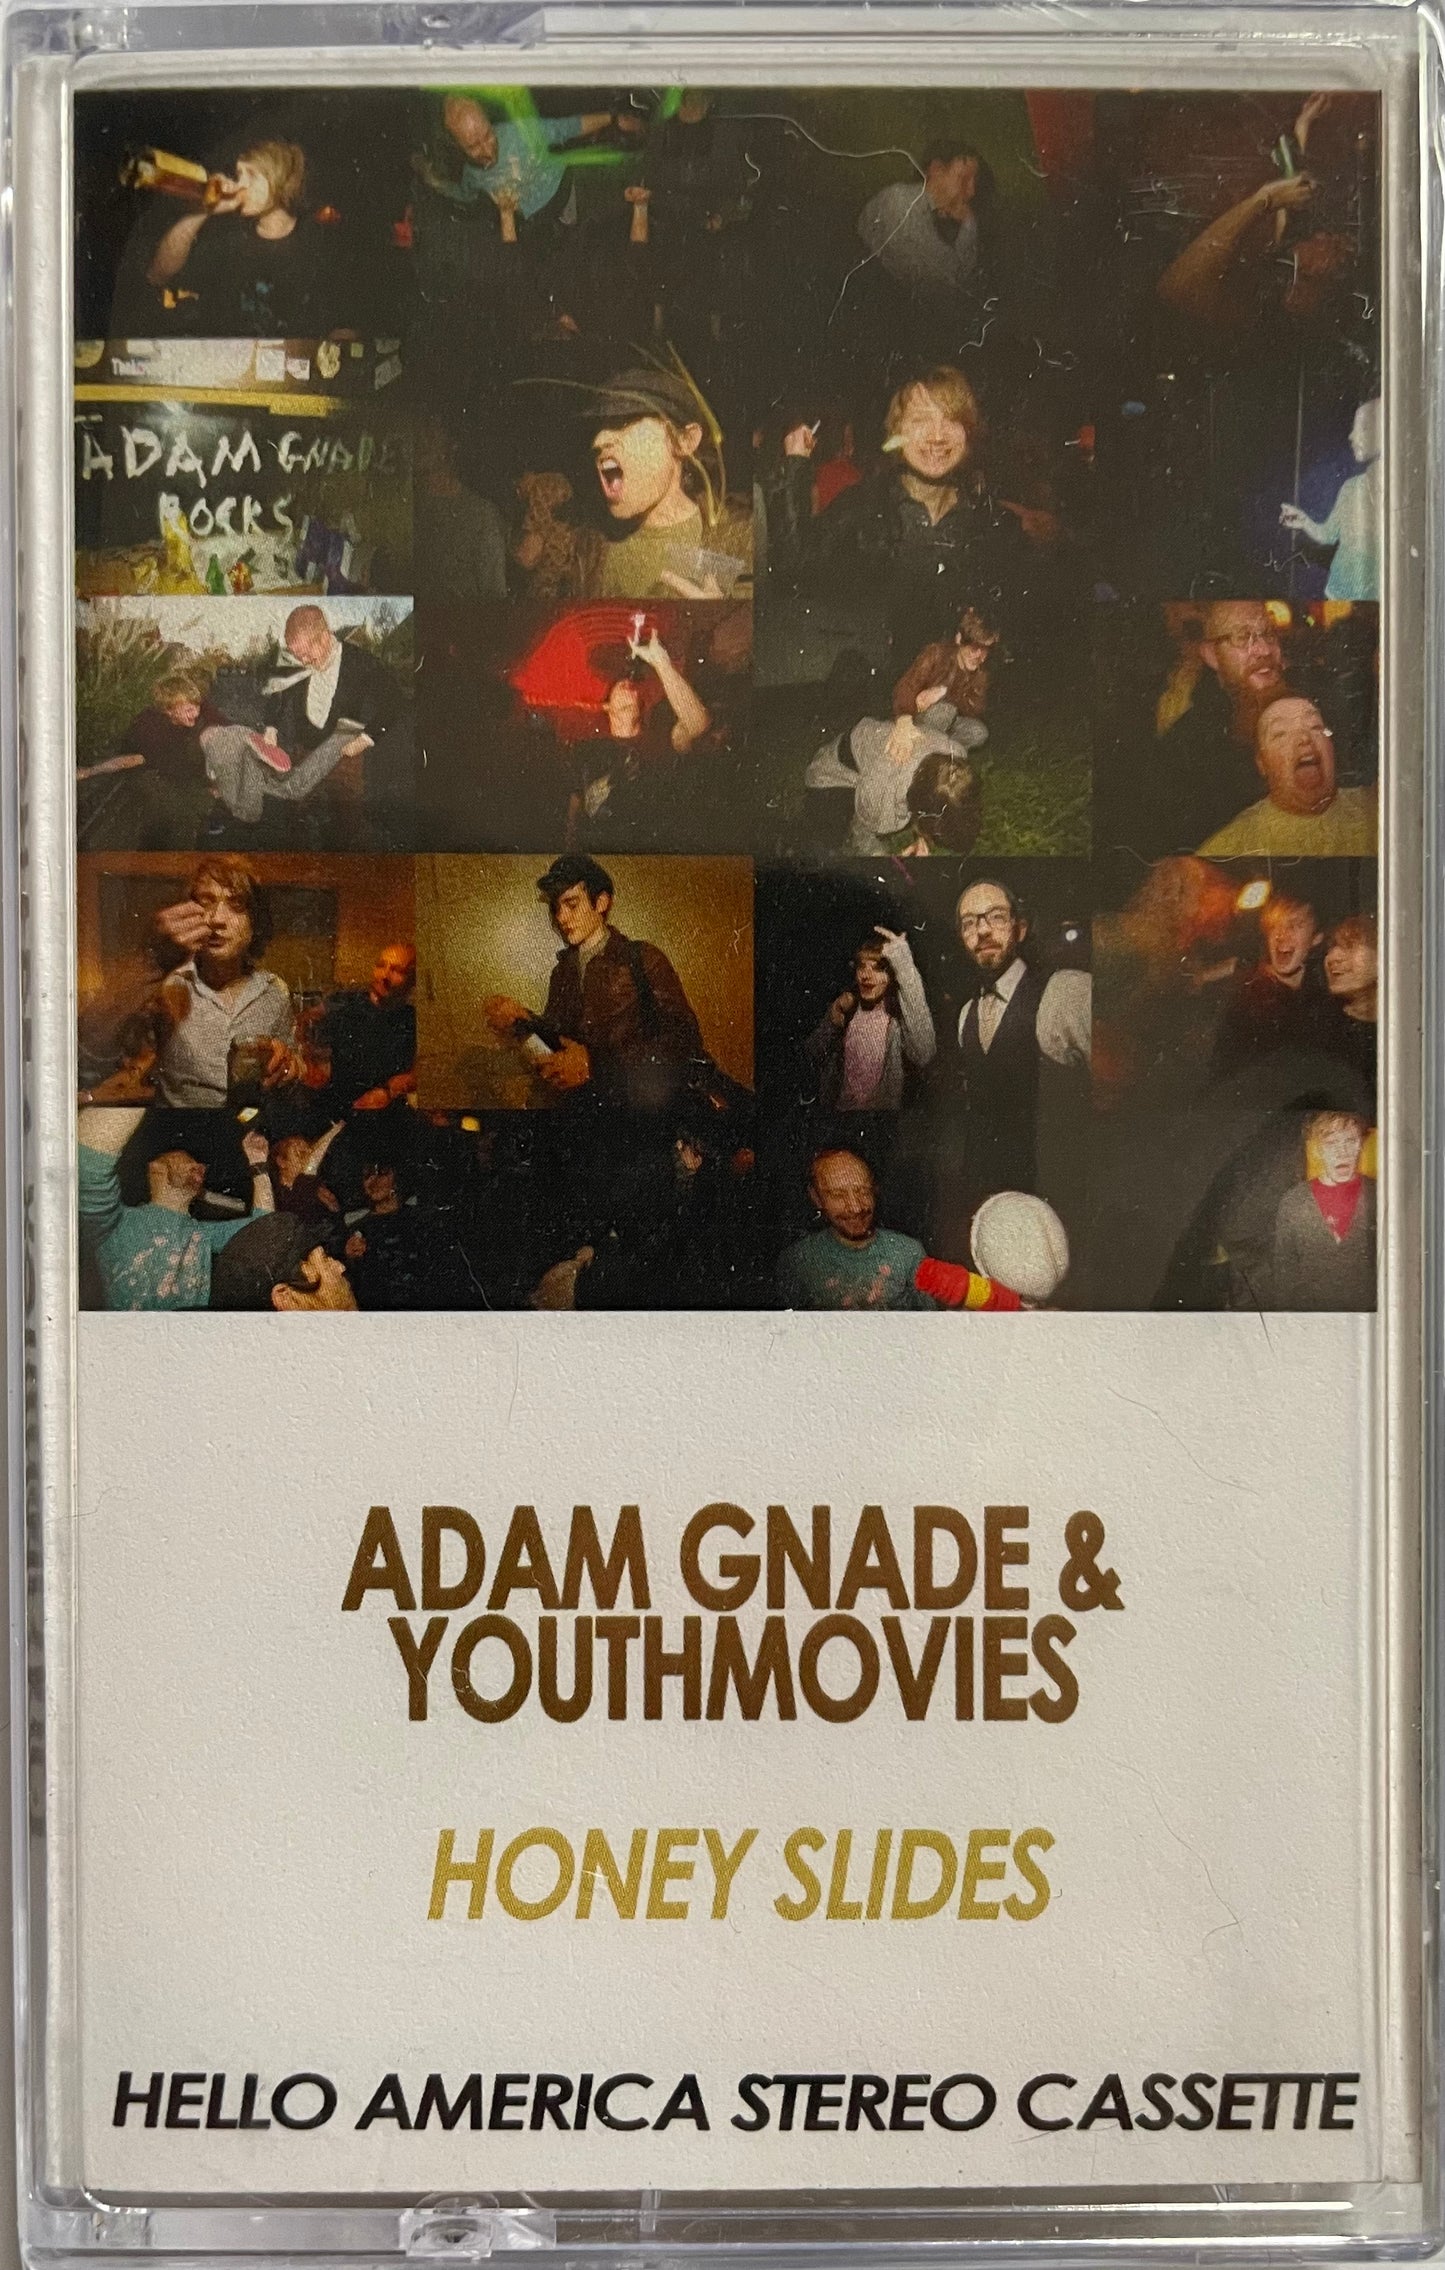 Honey Slides, by Adam Gnade & Youthmovies